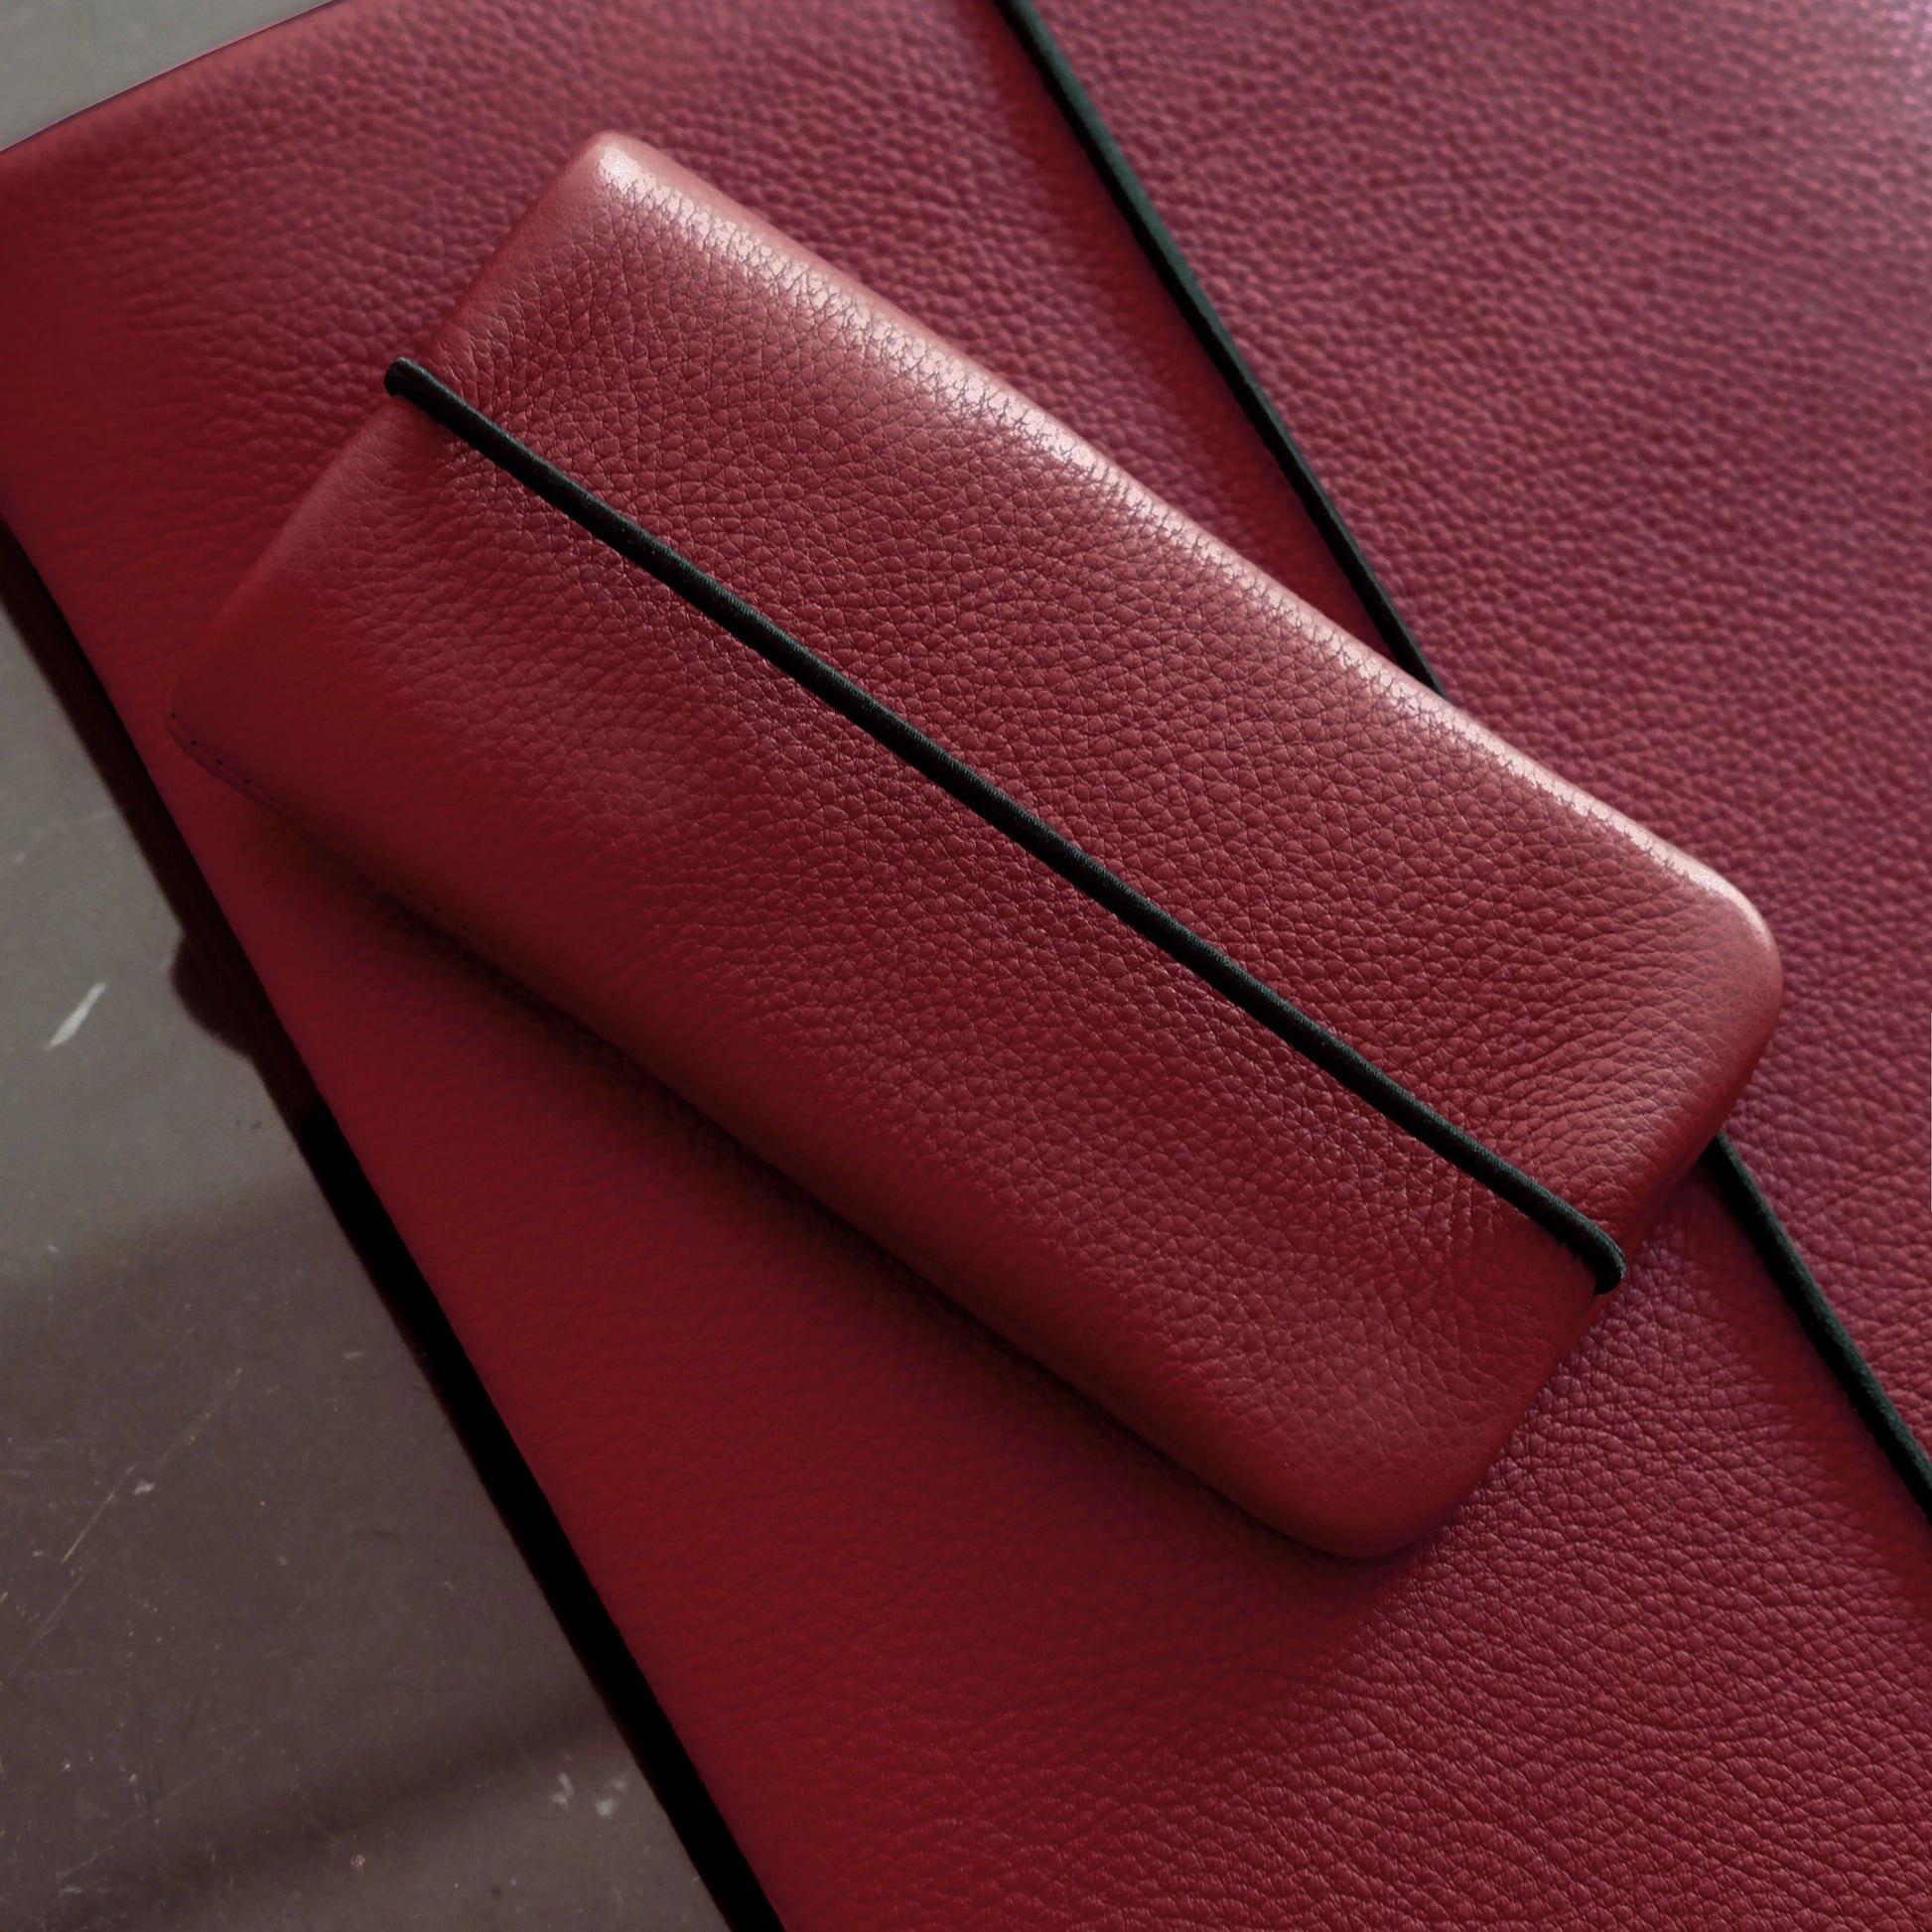 iPhonehülle aus dunkelrotem Leder liegt auf einer Macbookhülle aus dunkelrotem Leder